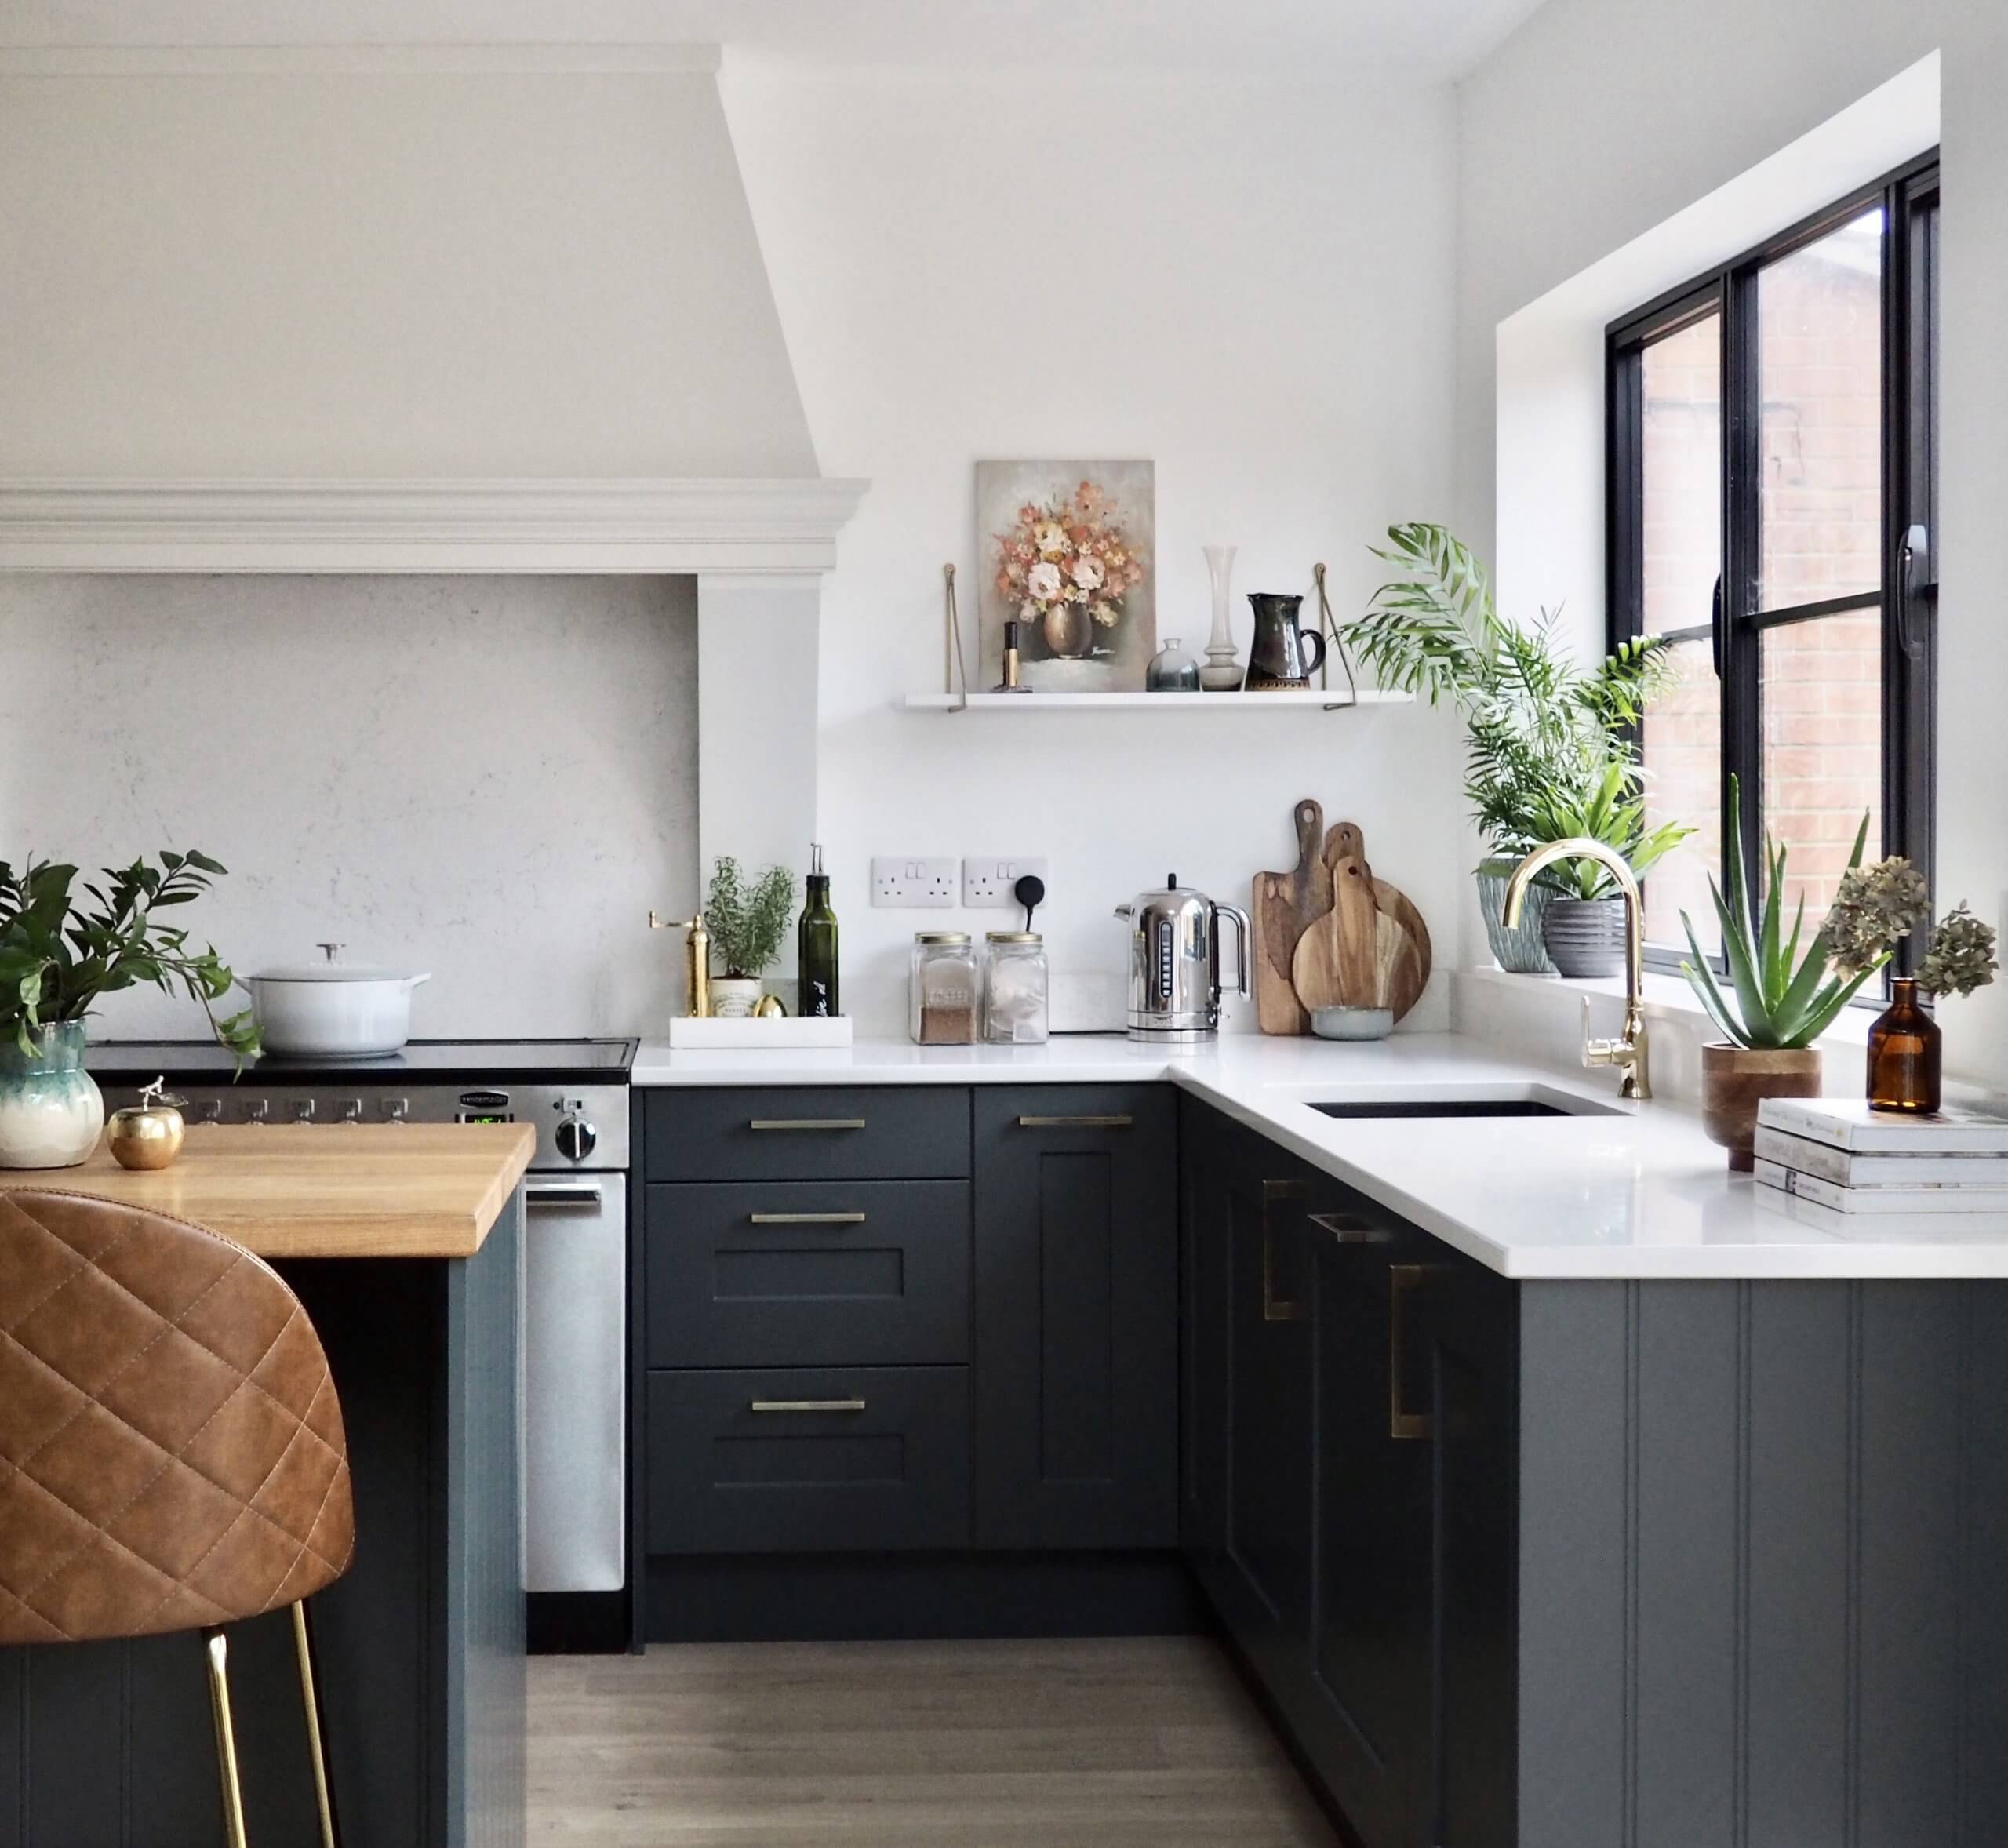 White Kitchen With Black Counter: Design Ideas - HeckHome